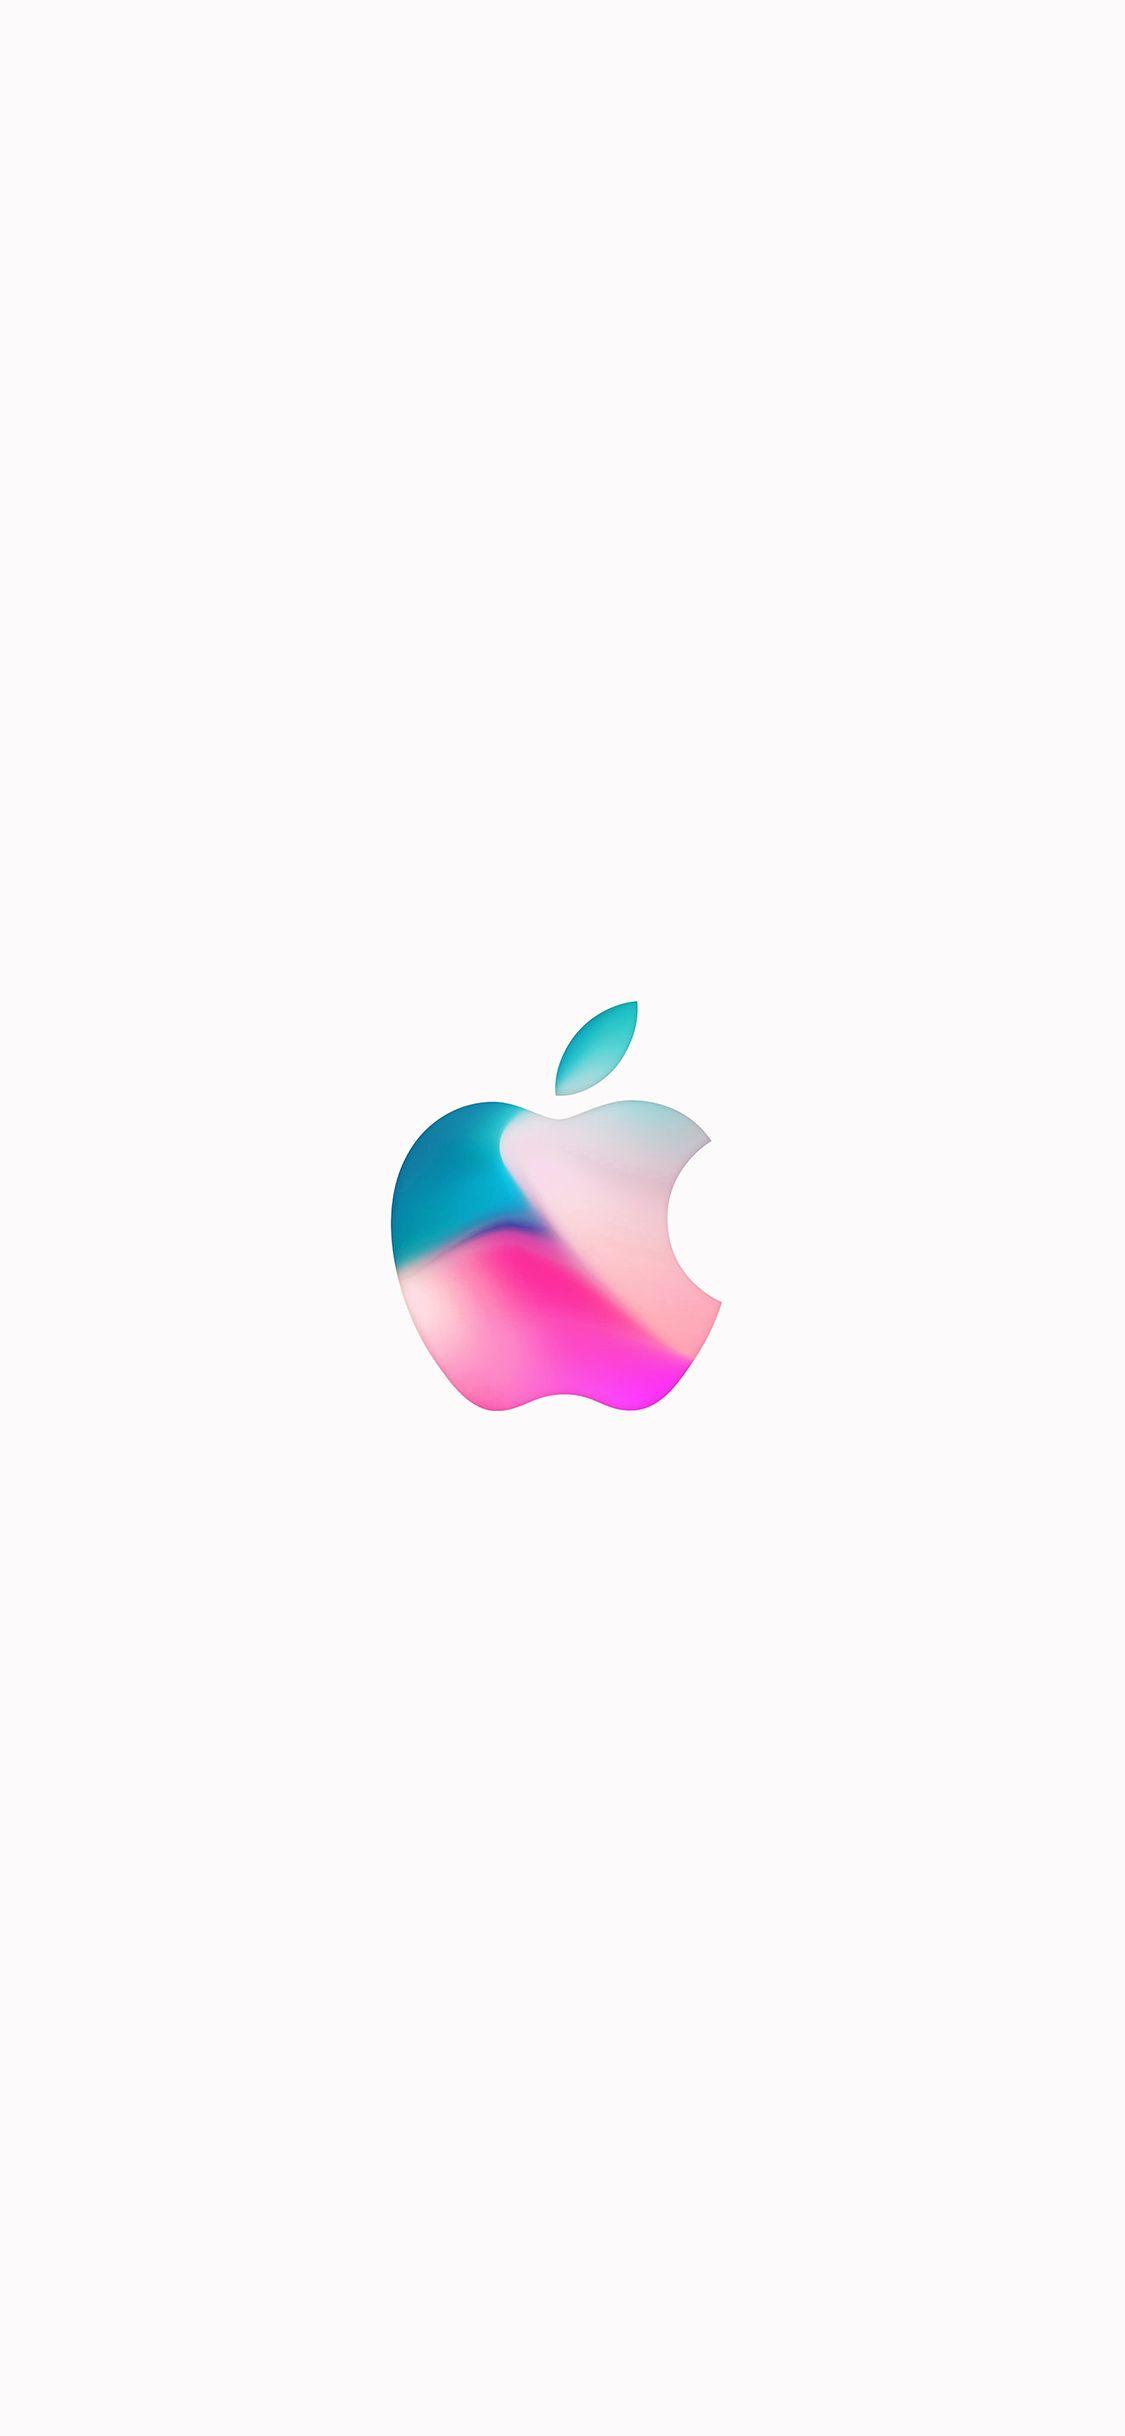 iPhone X Logo - iPhone X wallpaper. apple iphonex logo